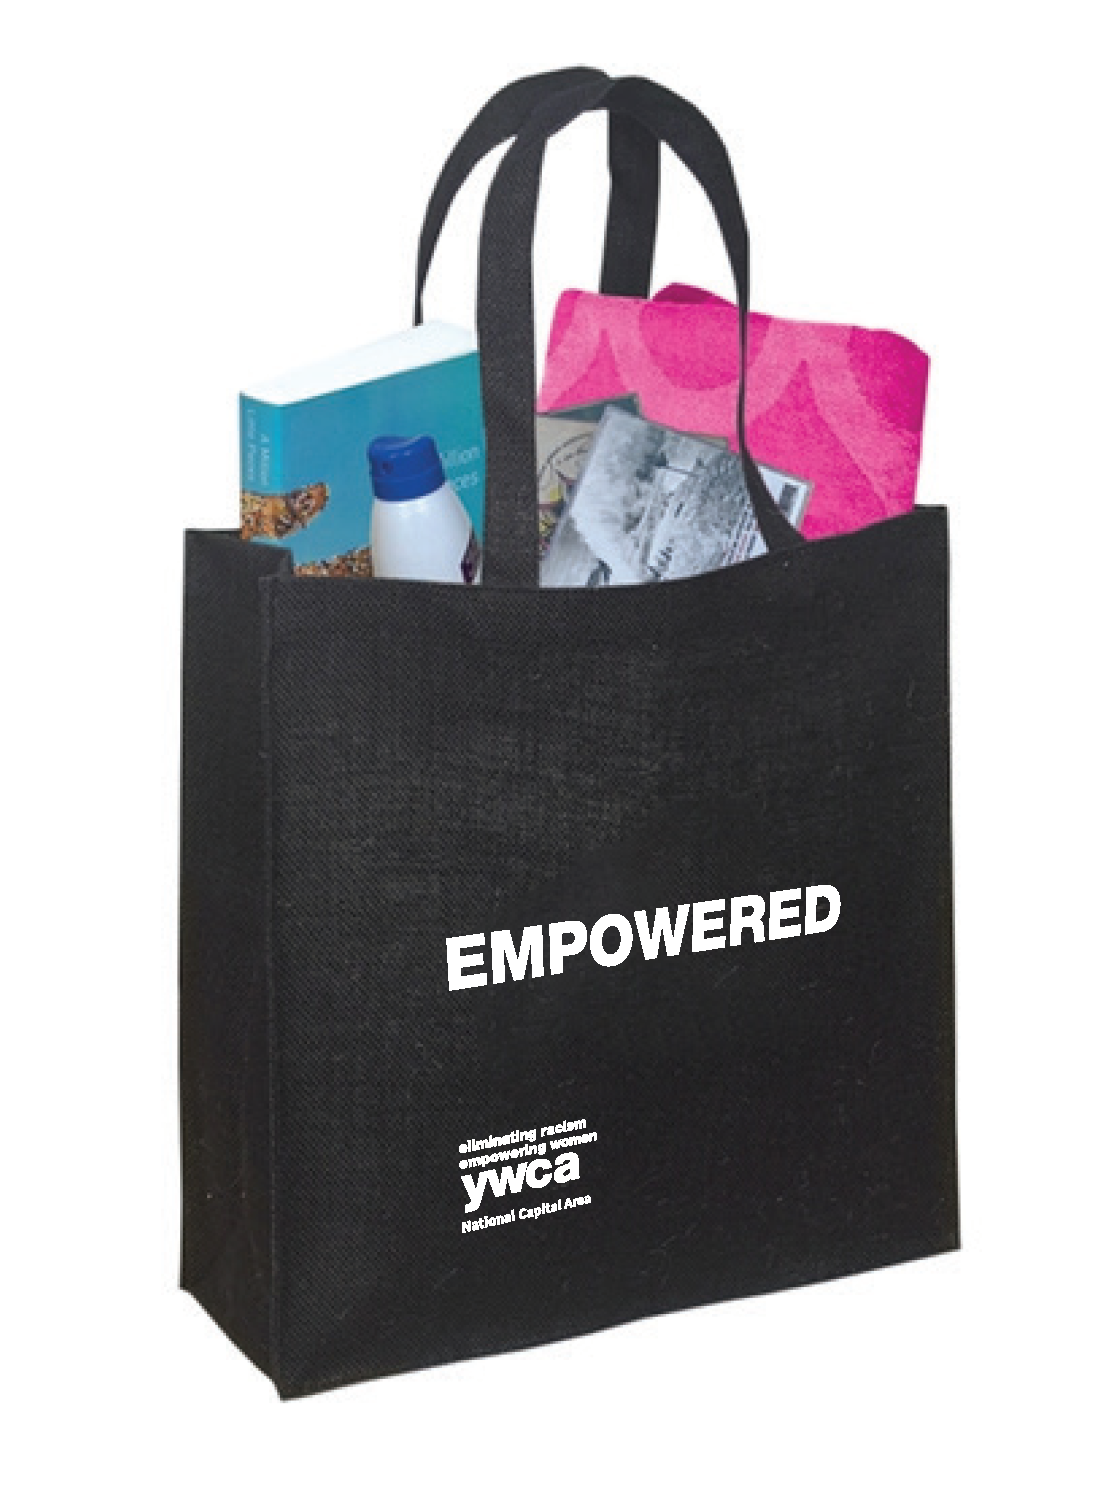 YWCA NCA Empowered Tote Bag